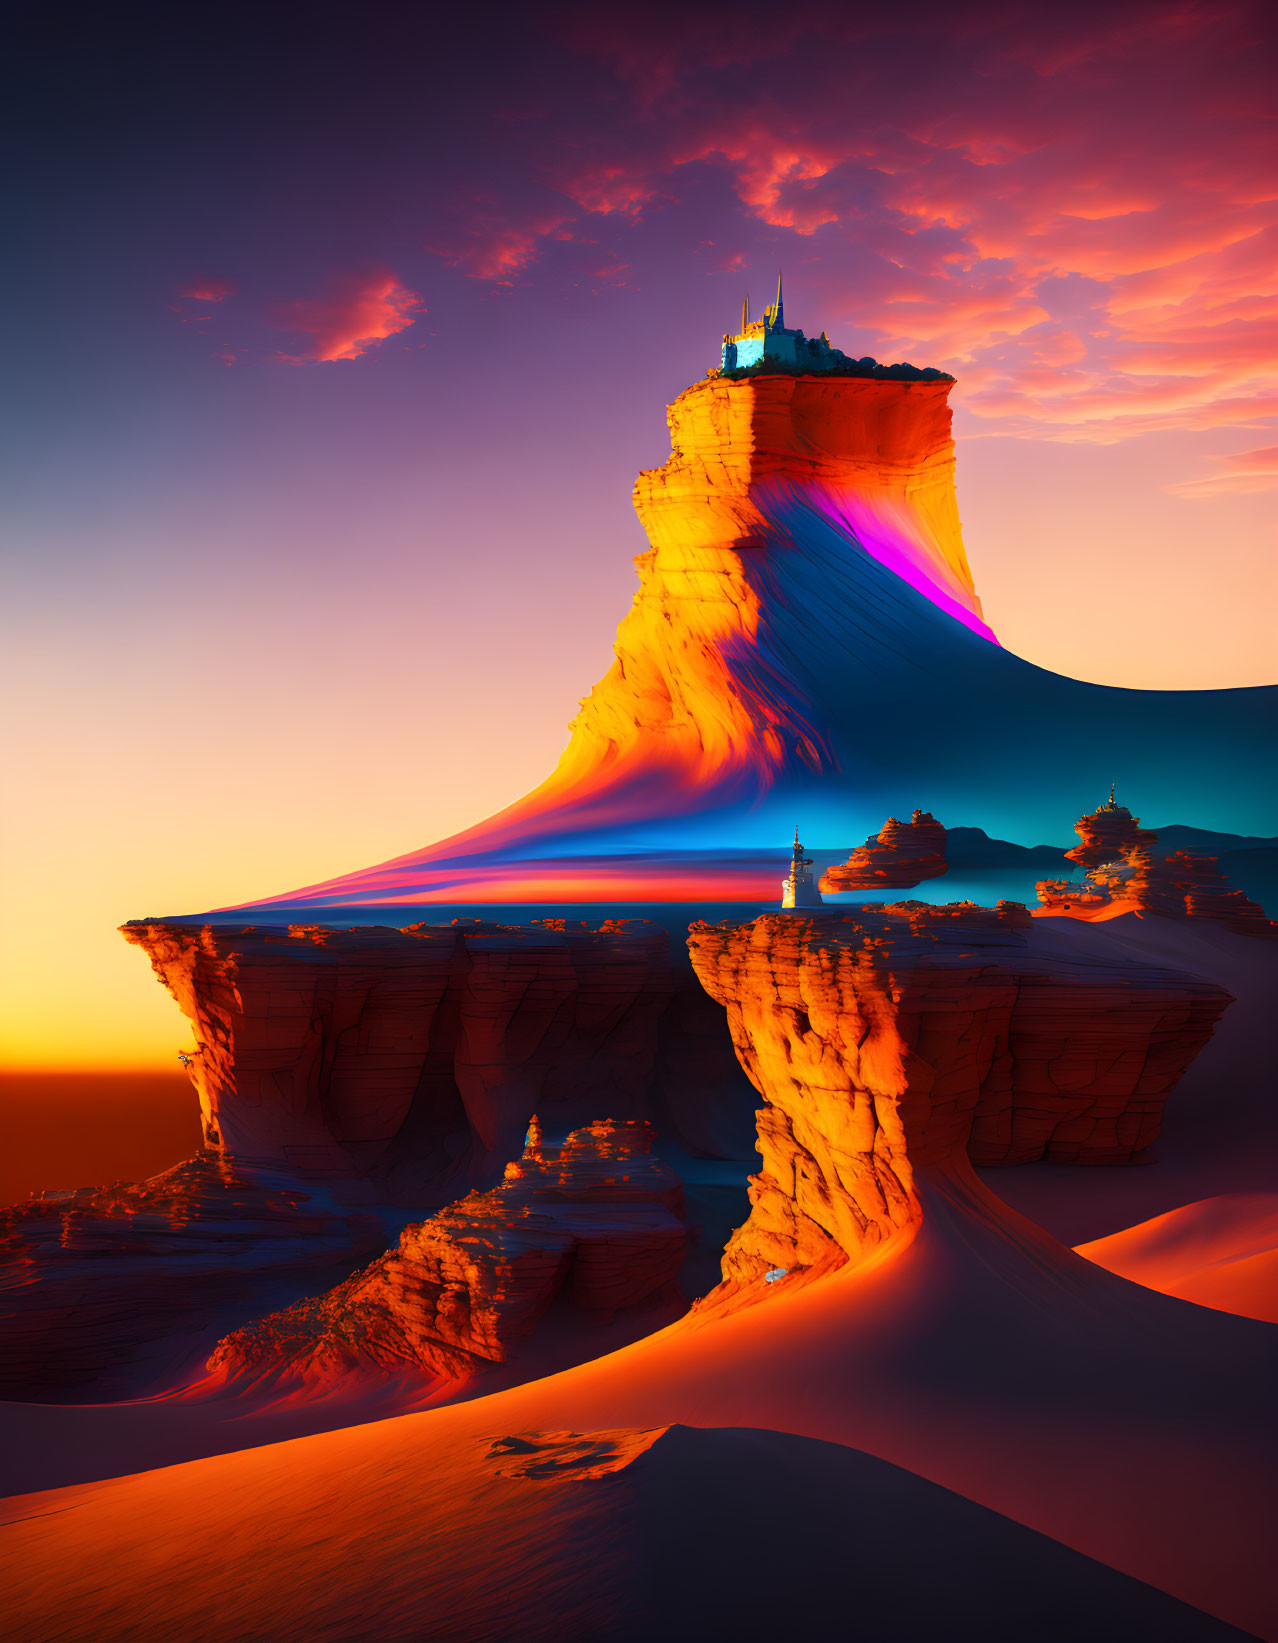 Vibrant Digital Art: Desert Sandstone Formation with Castle-Like Structure